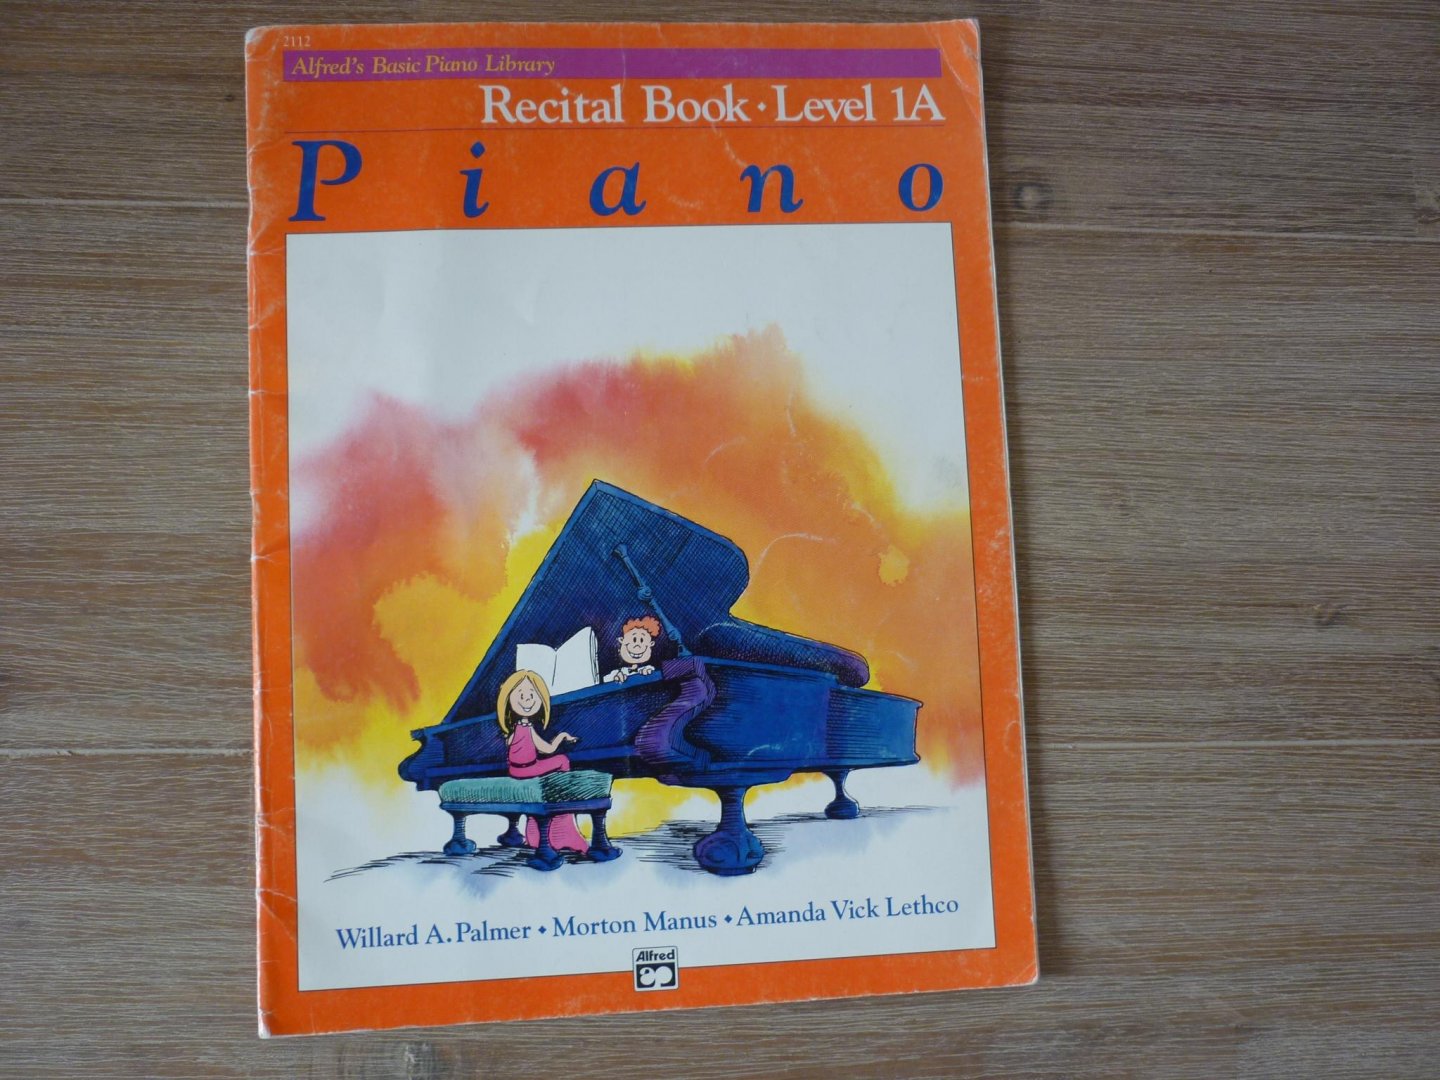 Willard Palmer (1917–1996), Morton Manus, Amanda Vick Lethco (1921–2000) - Recital Book - level 1a; Alfred's Basic Piano; voor Piano - Muziekboek